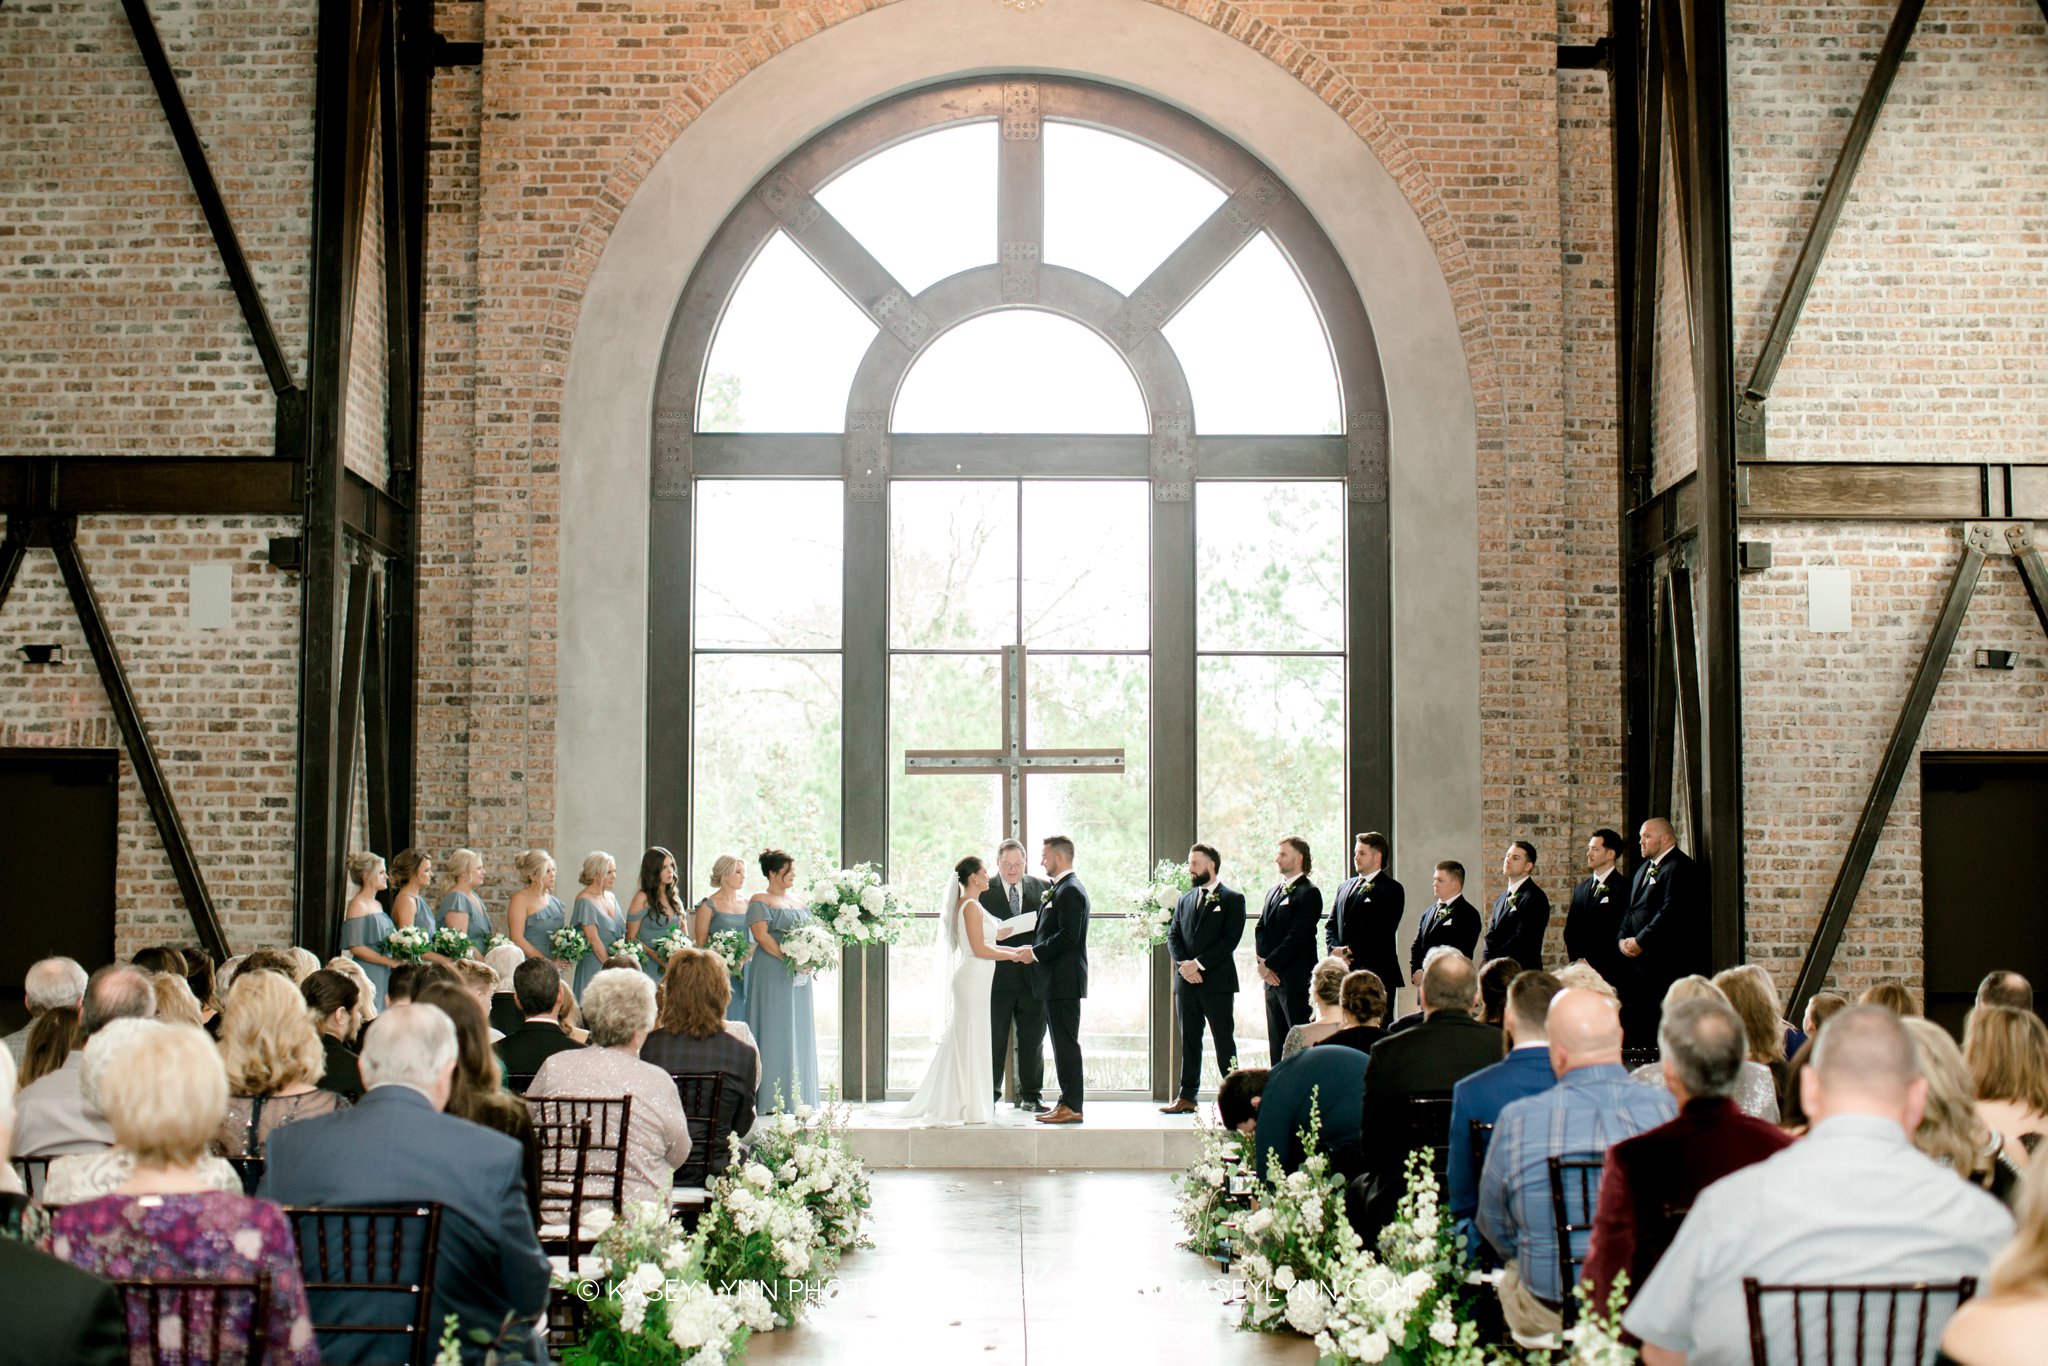 Iron Manor Wedding / Kasey Lynn Photography